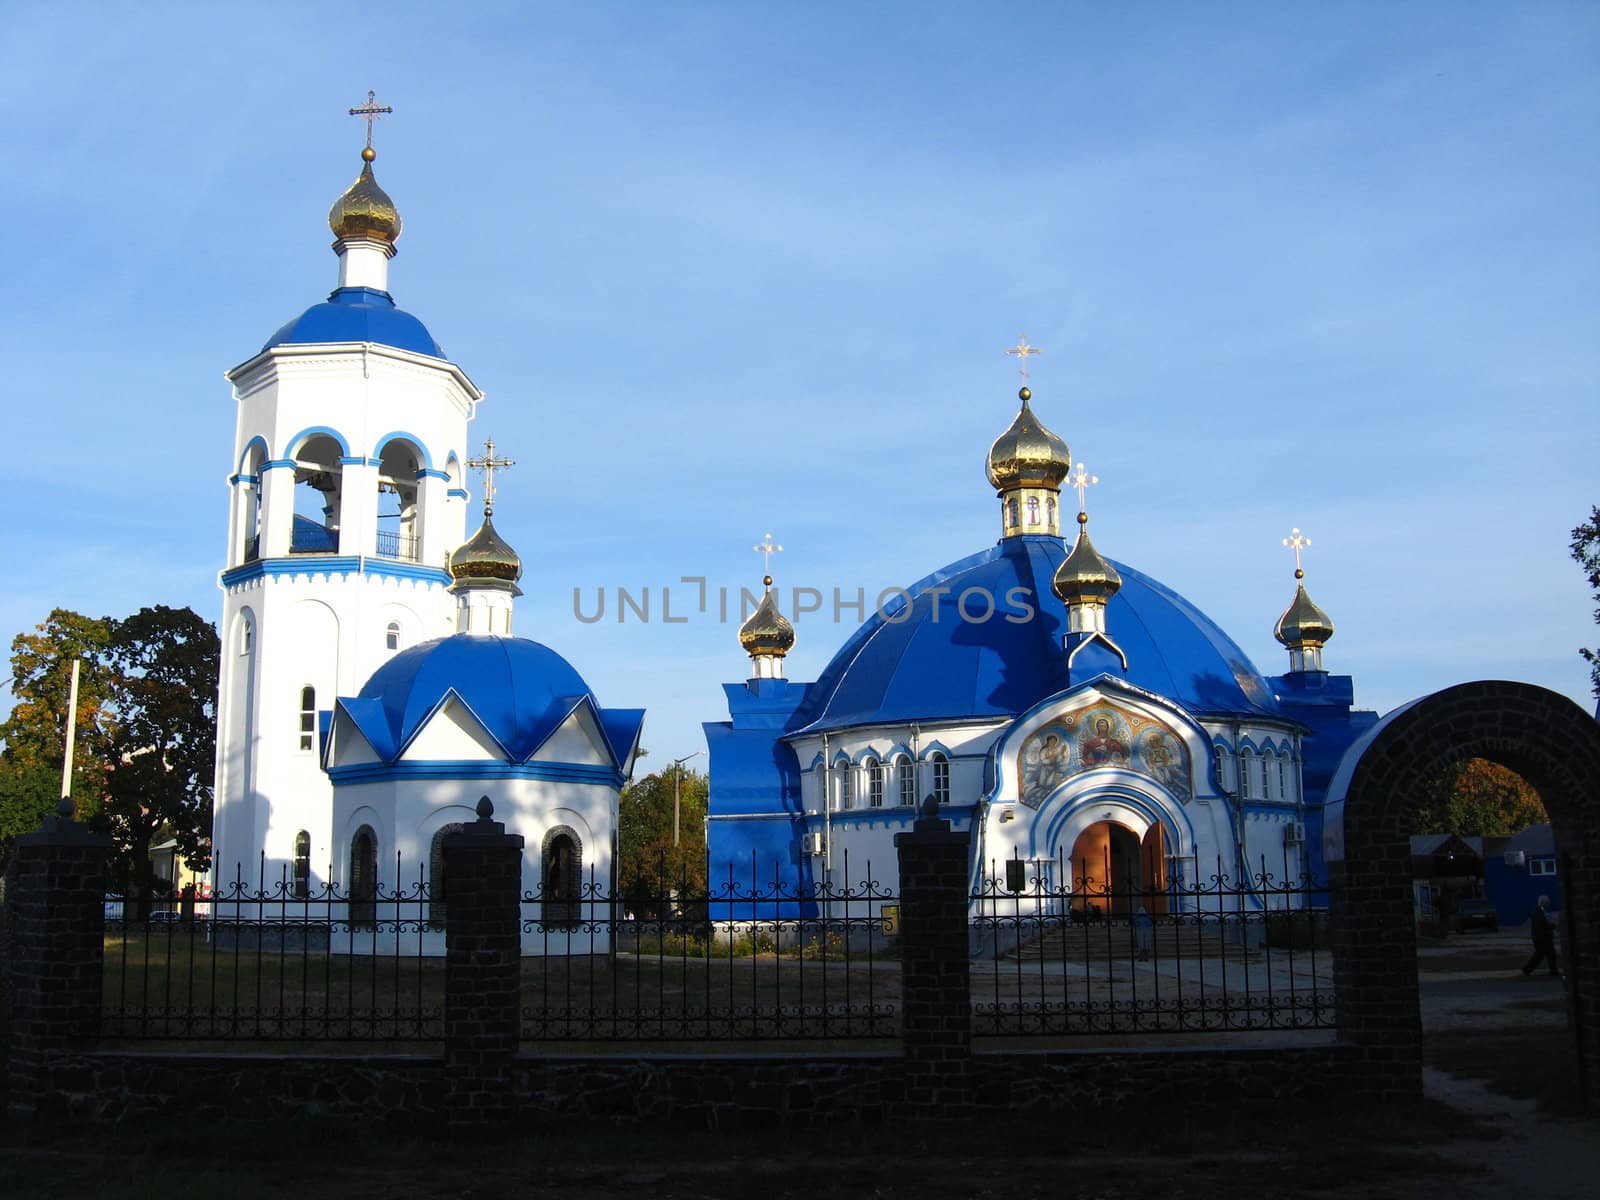 a beautiful small Christian monastery with nice church